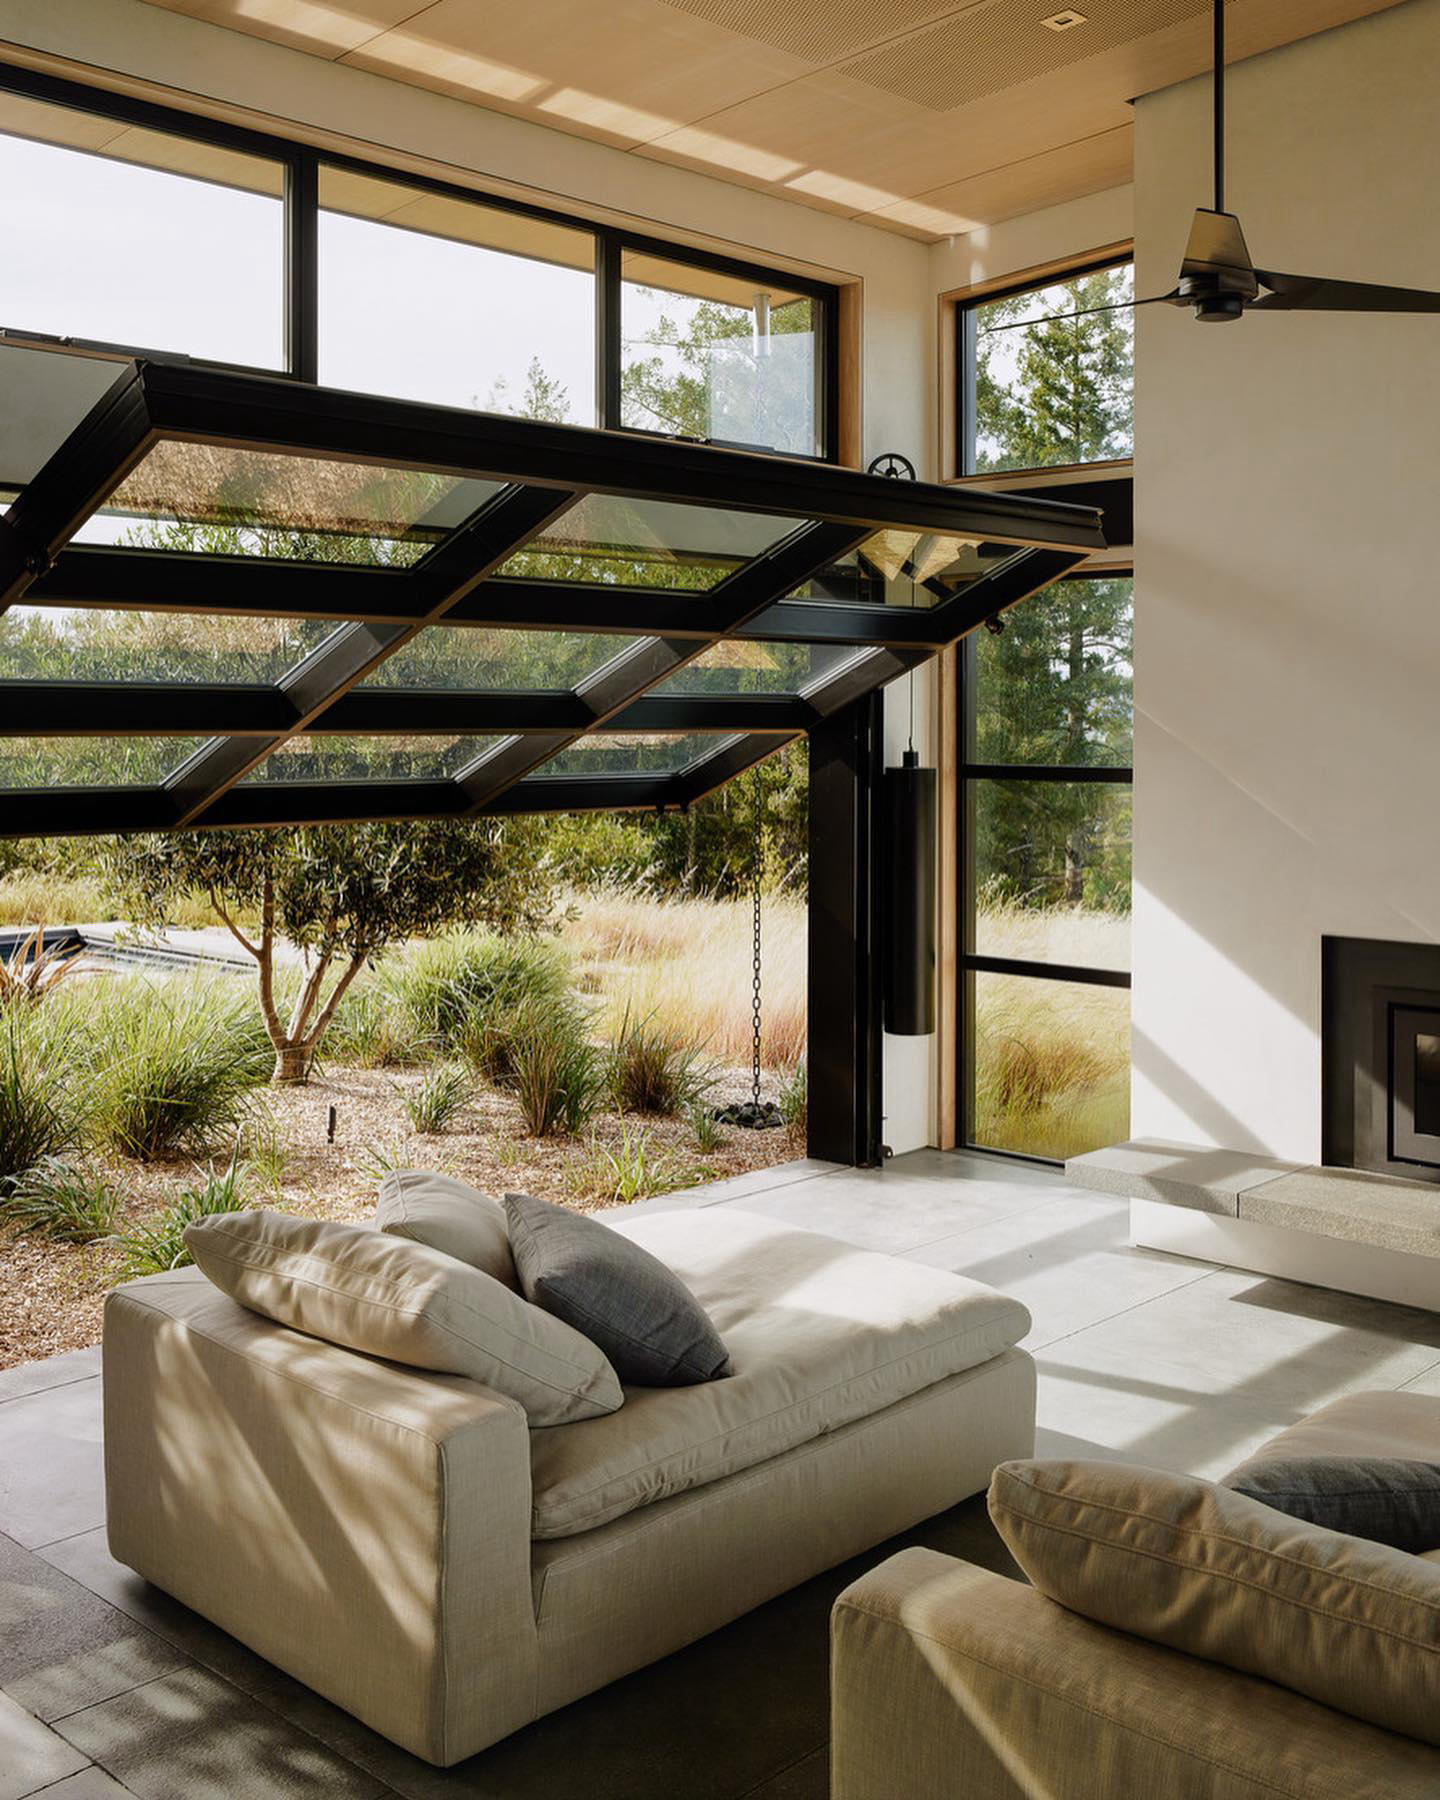 image  1 Local firm #feldmanarchitecture incorporates garage-door windows into CA home